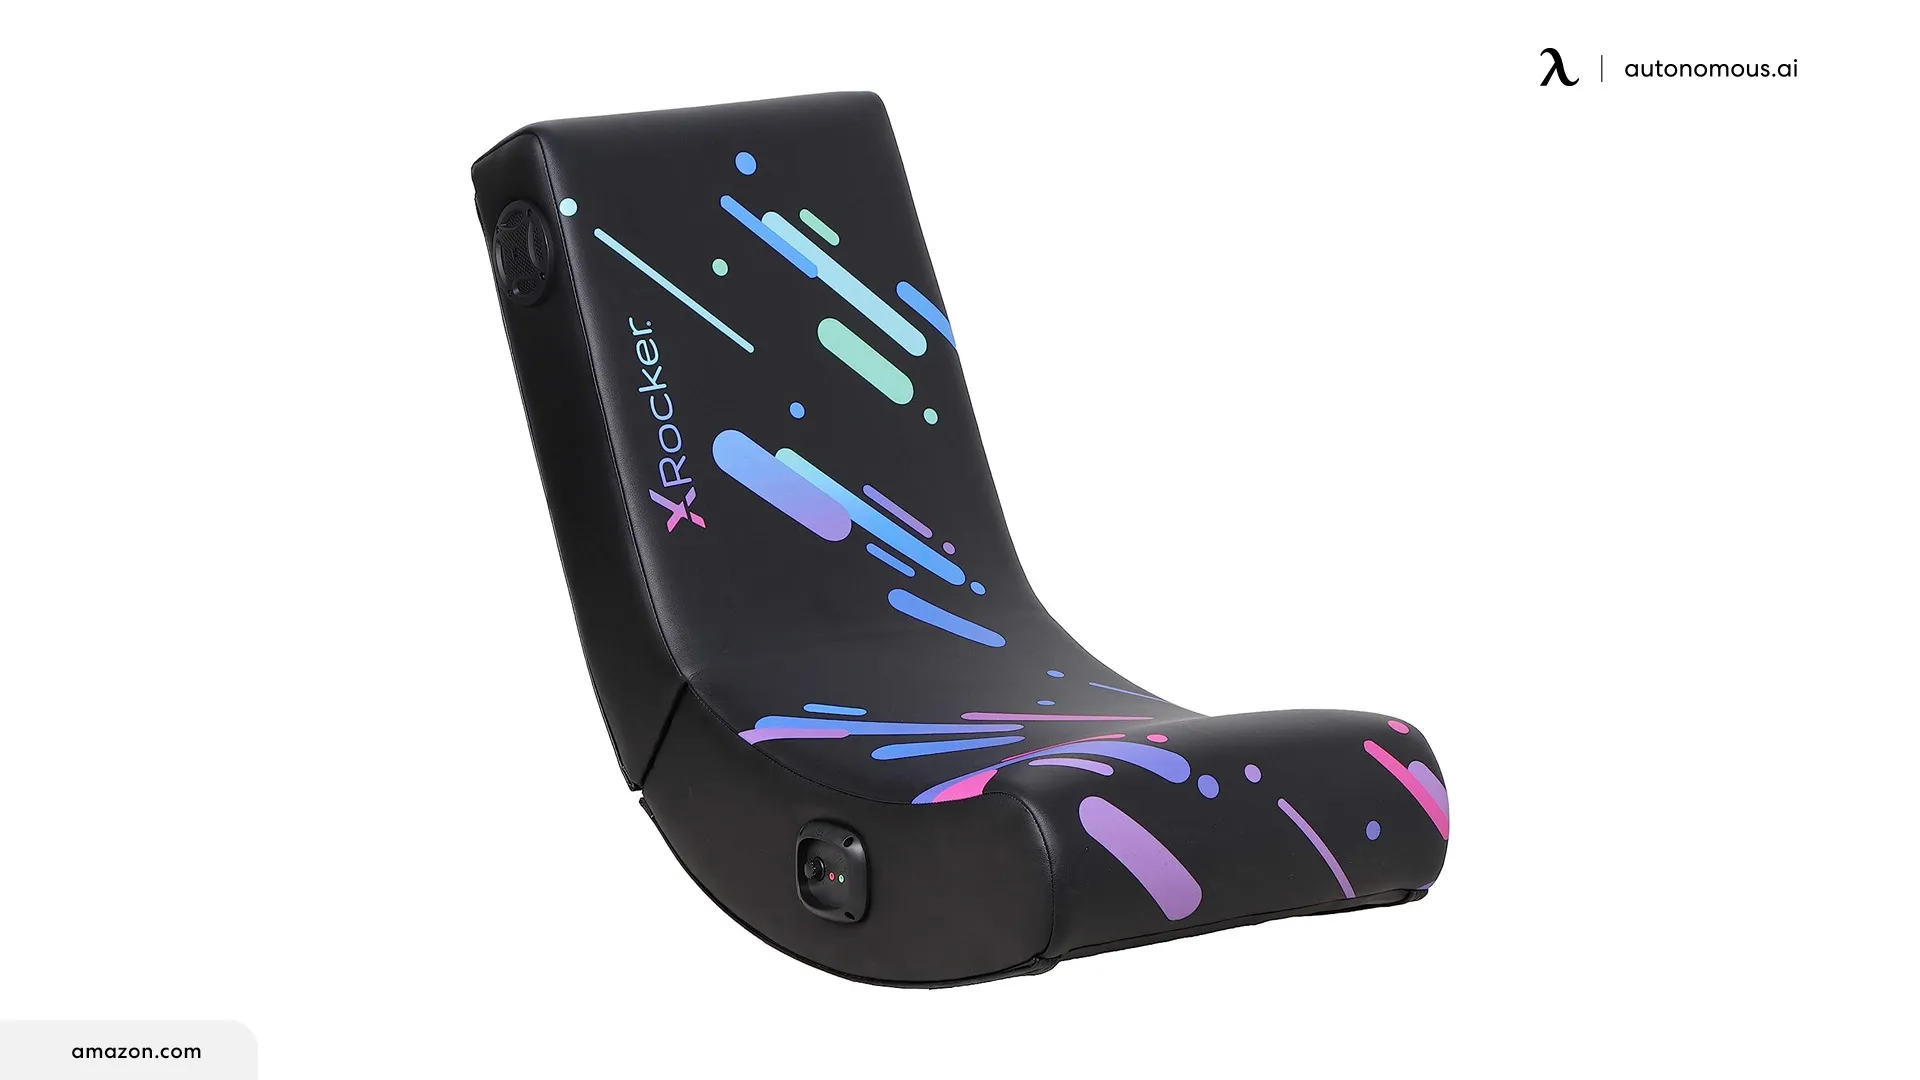 X Rocker Floor Rocking Gaming Chair